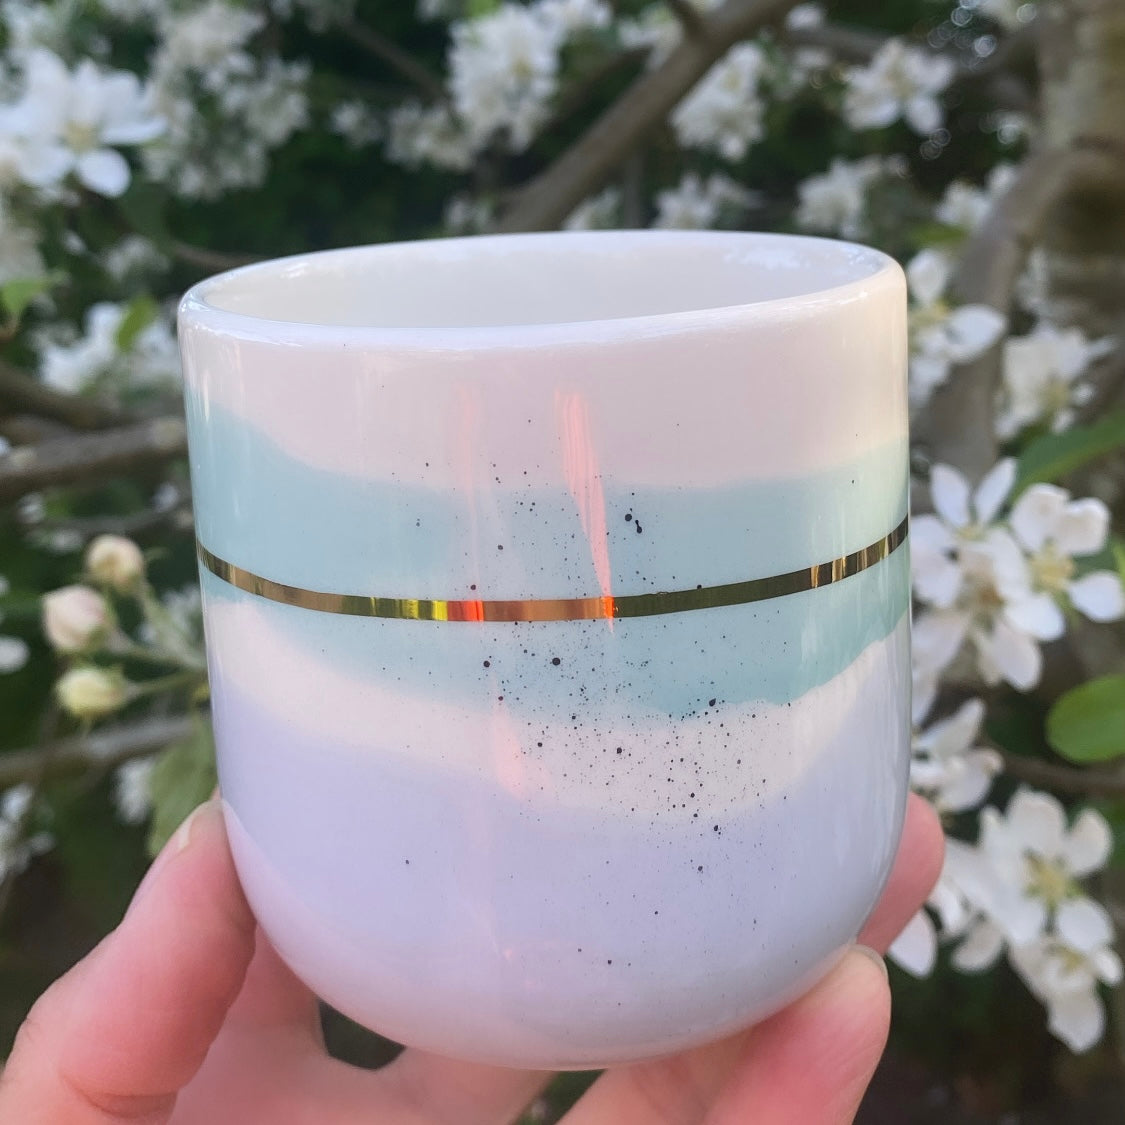 1 BACK Marinski Heartmade latte cup Landscape - light celestial blue and dusty mint